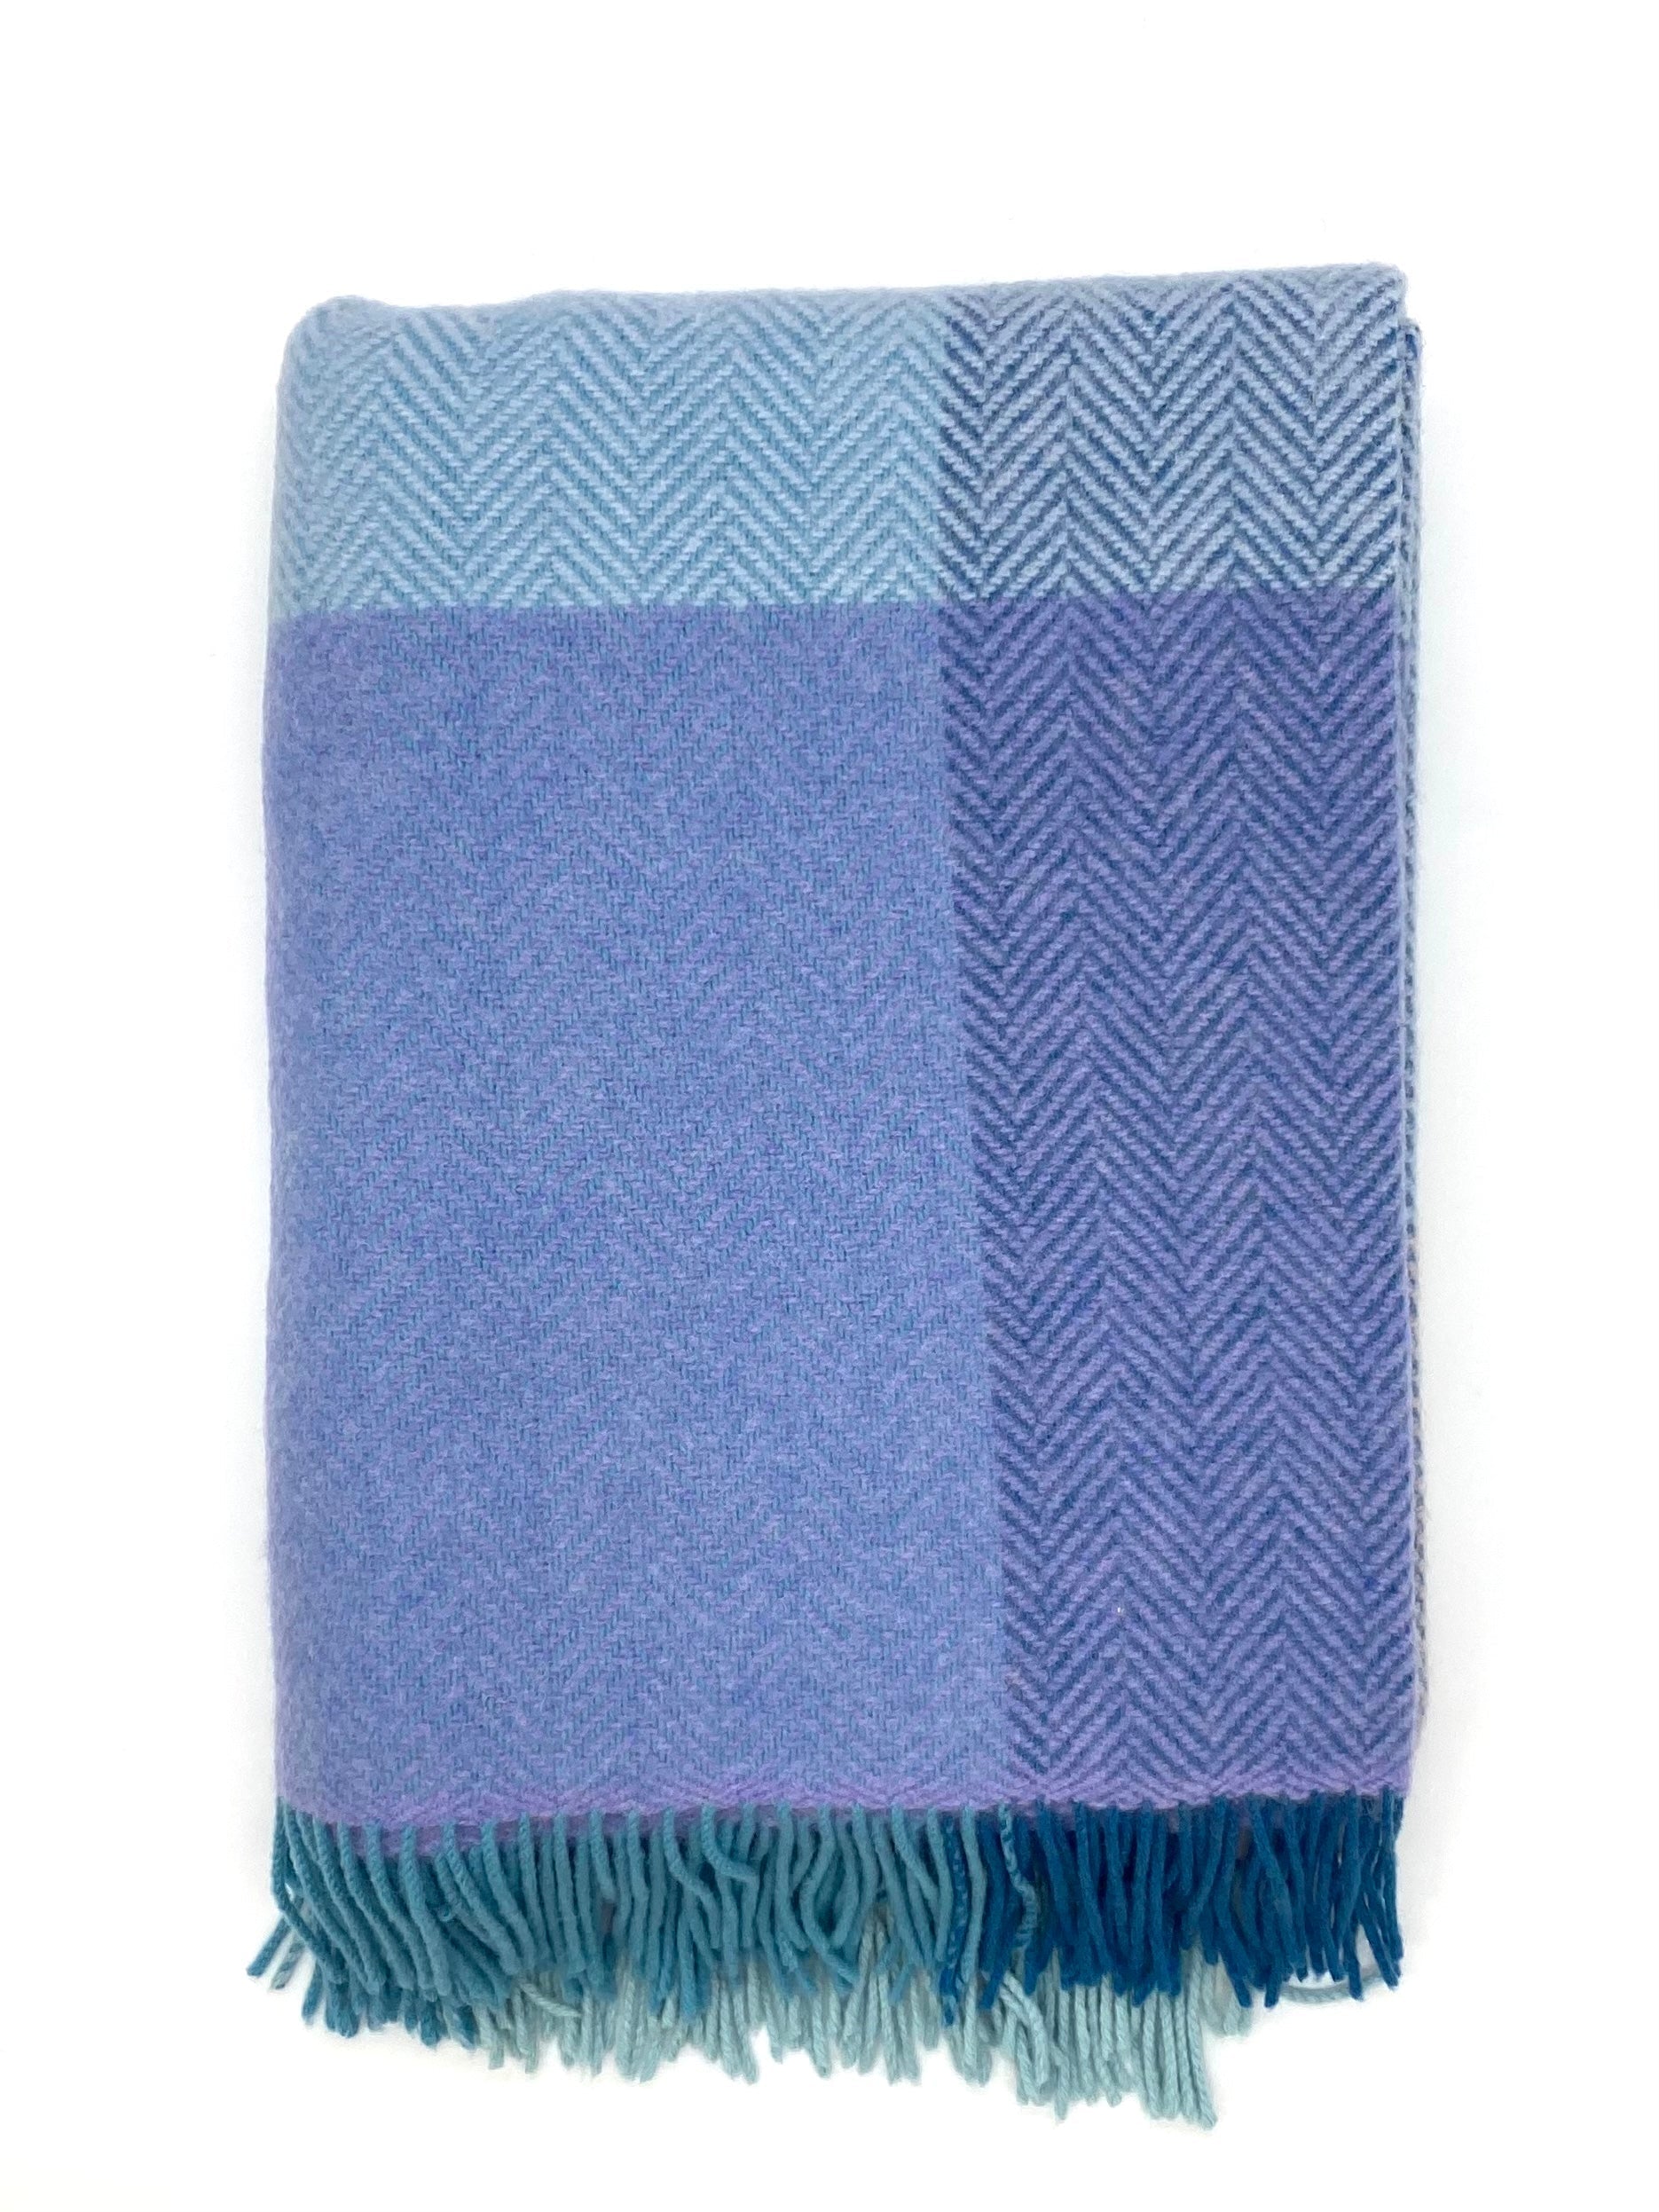 Merino Wool and Cashmere Throw - Aqua/ Lavender Block